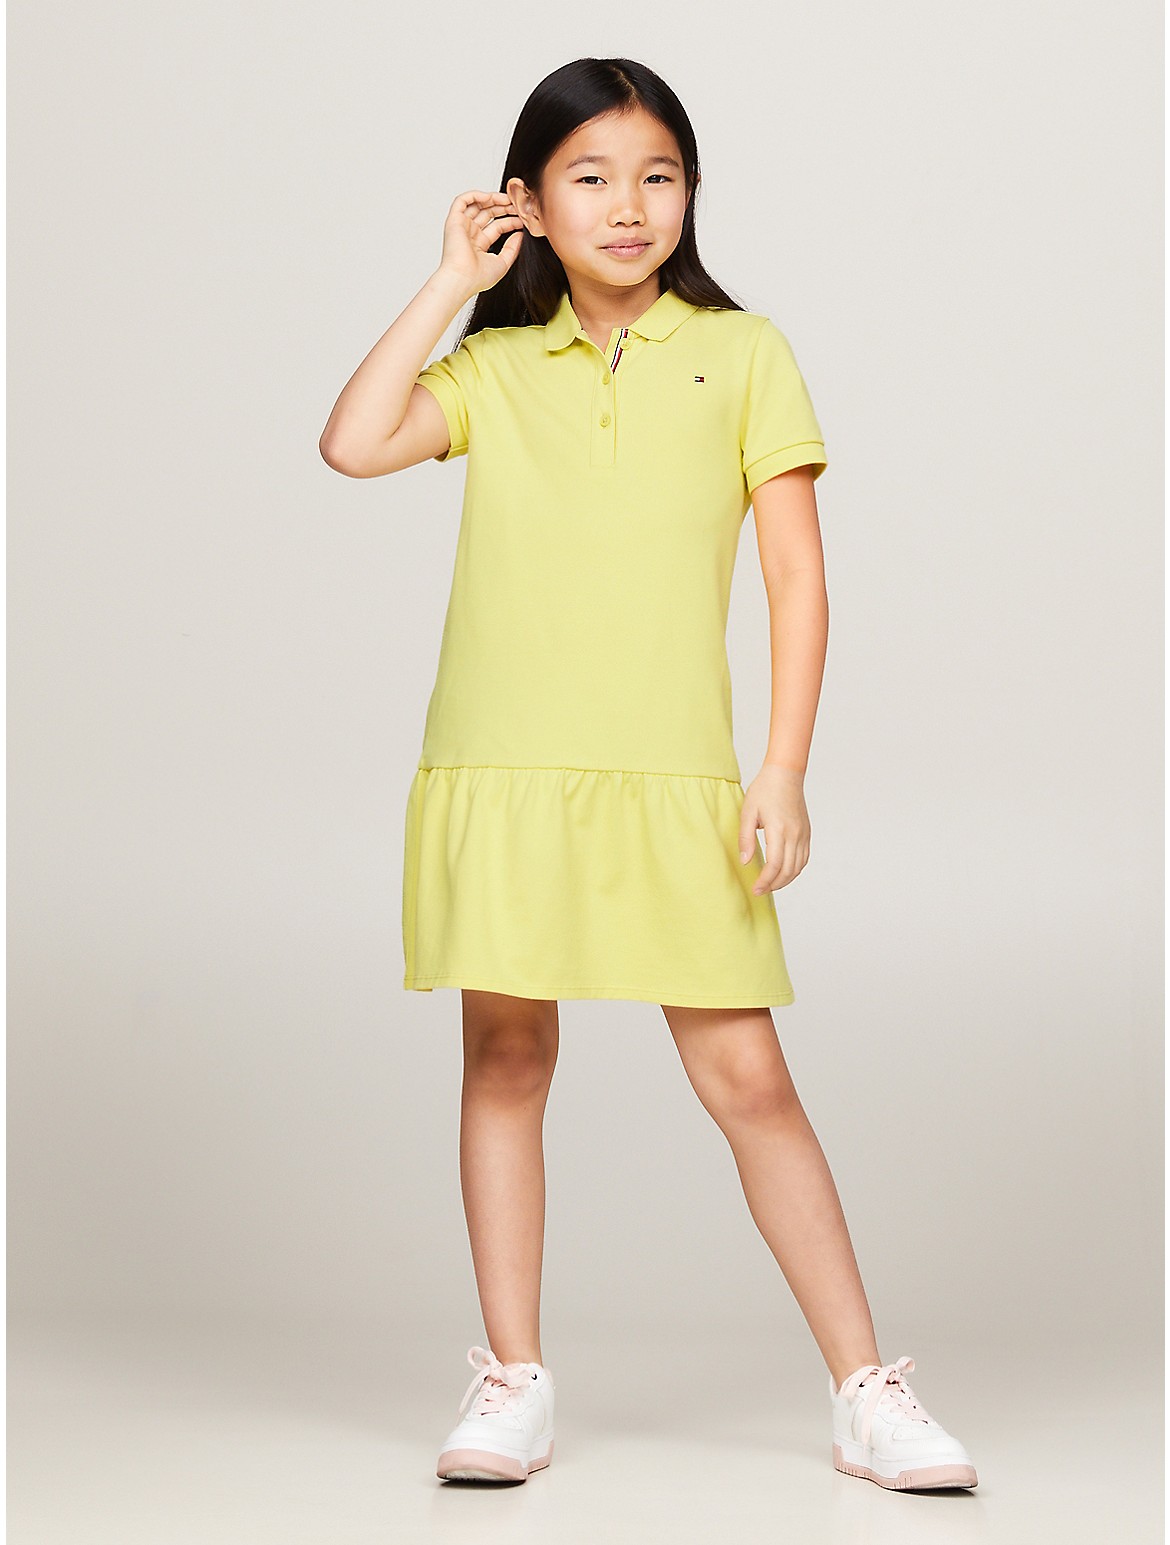 Tommy Hilfiger Girls' Kids' Solid Drop-Waist Polo Dress